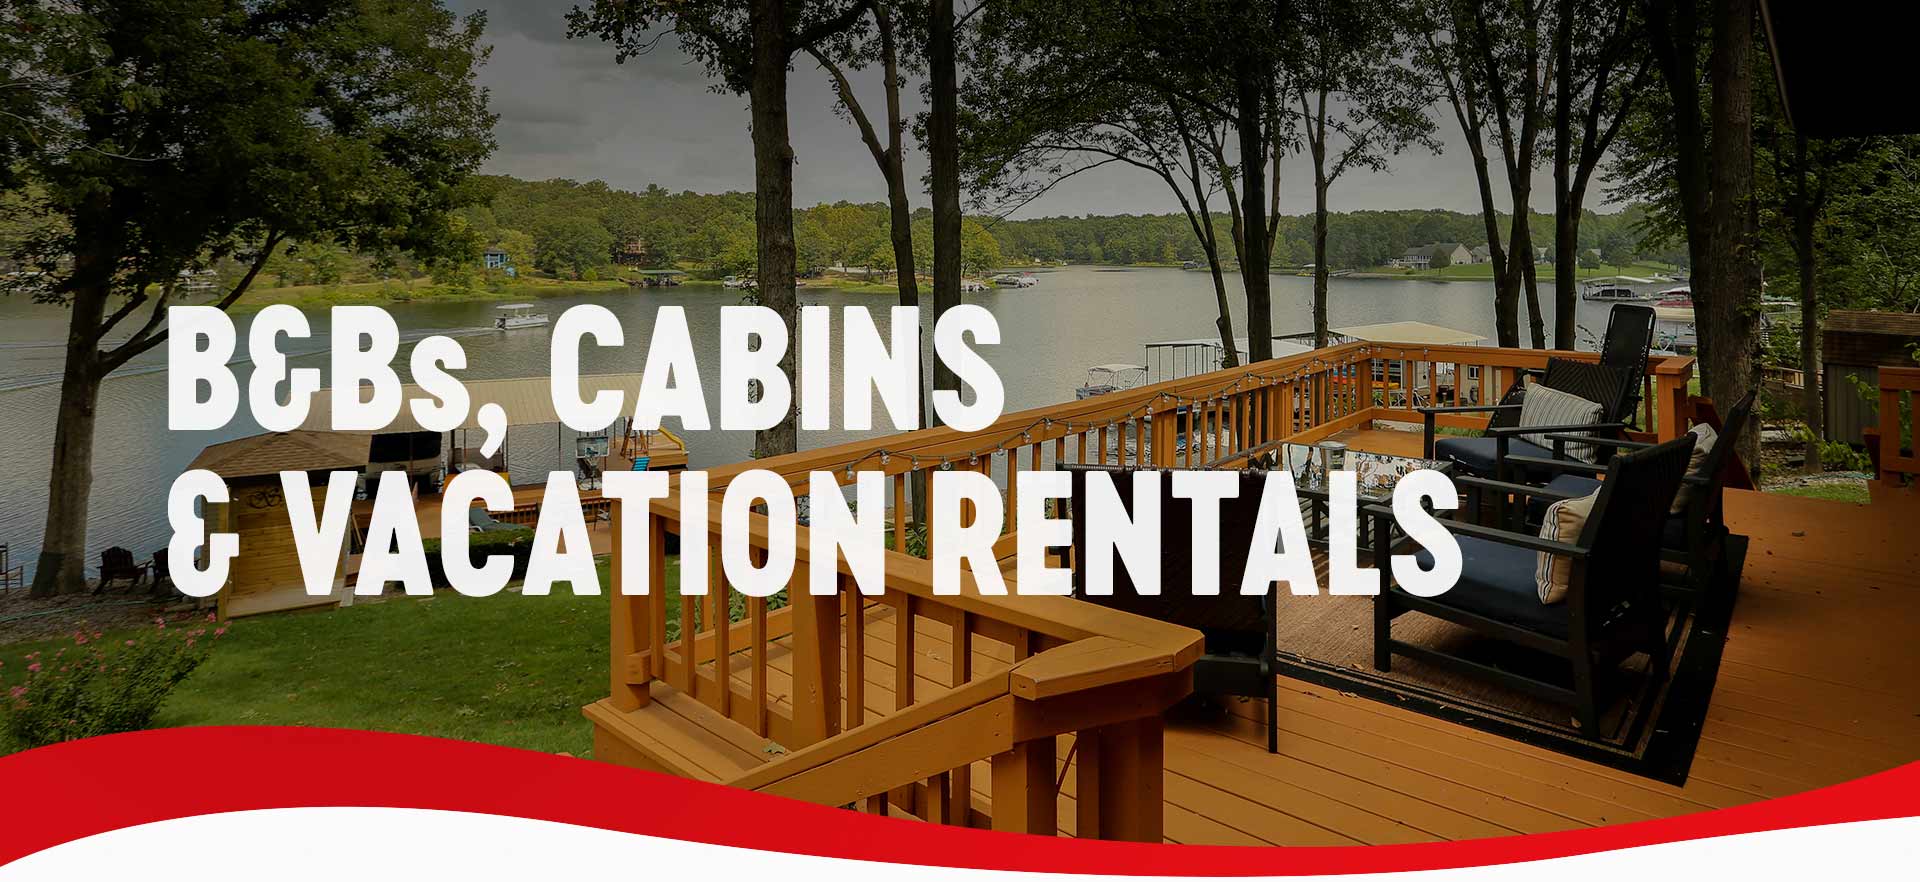 B&Bs, Cabins, & Vacation Rentals